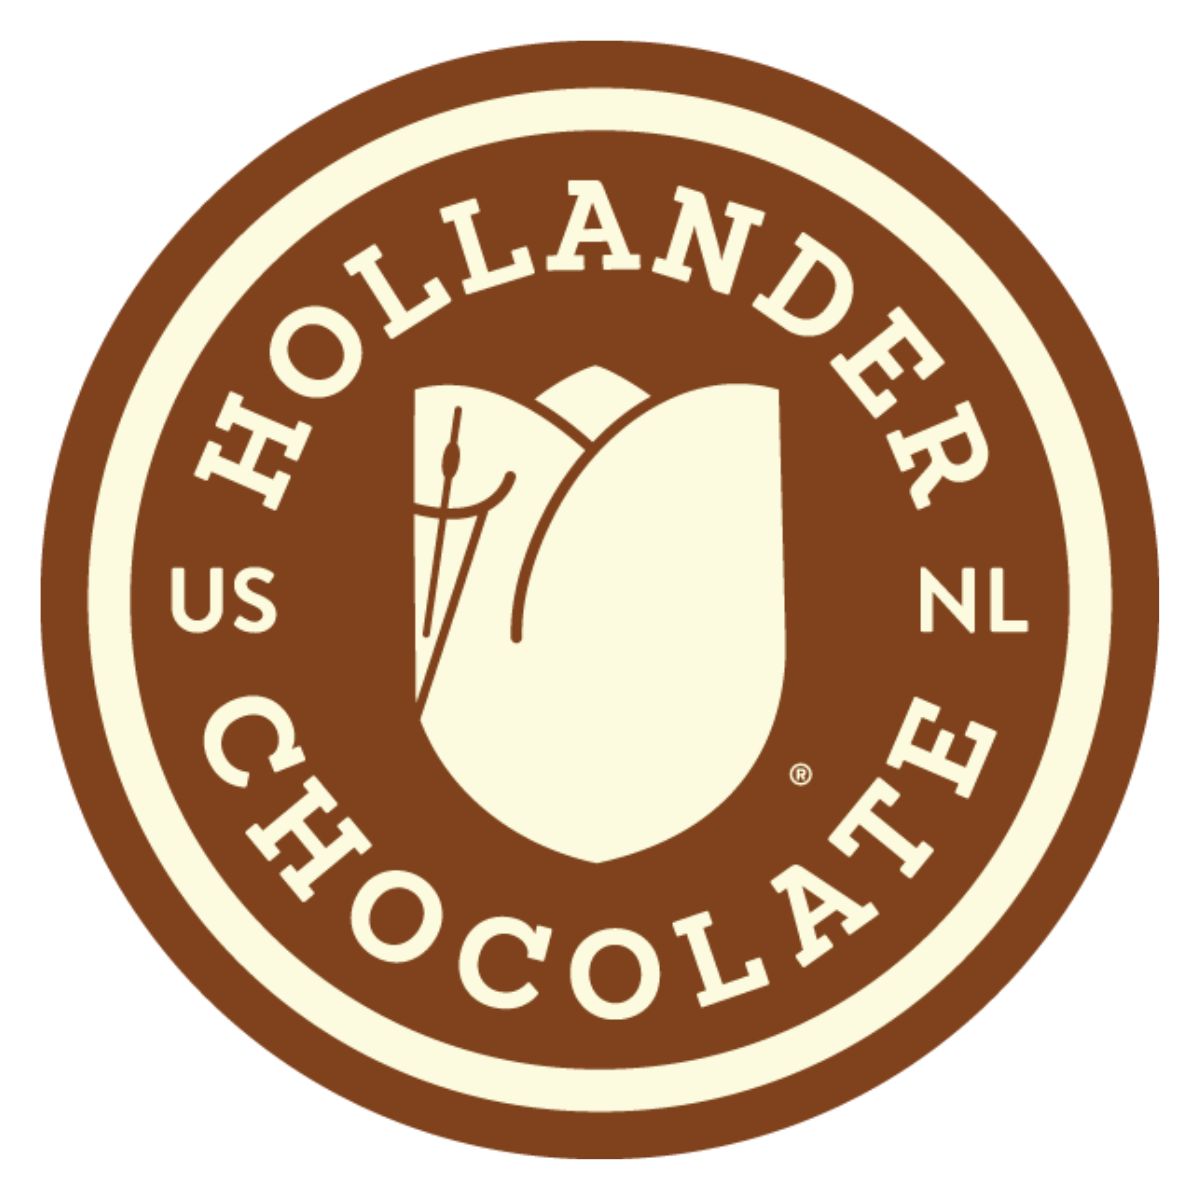 Hollander Chocolate Co.